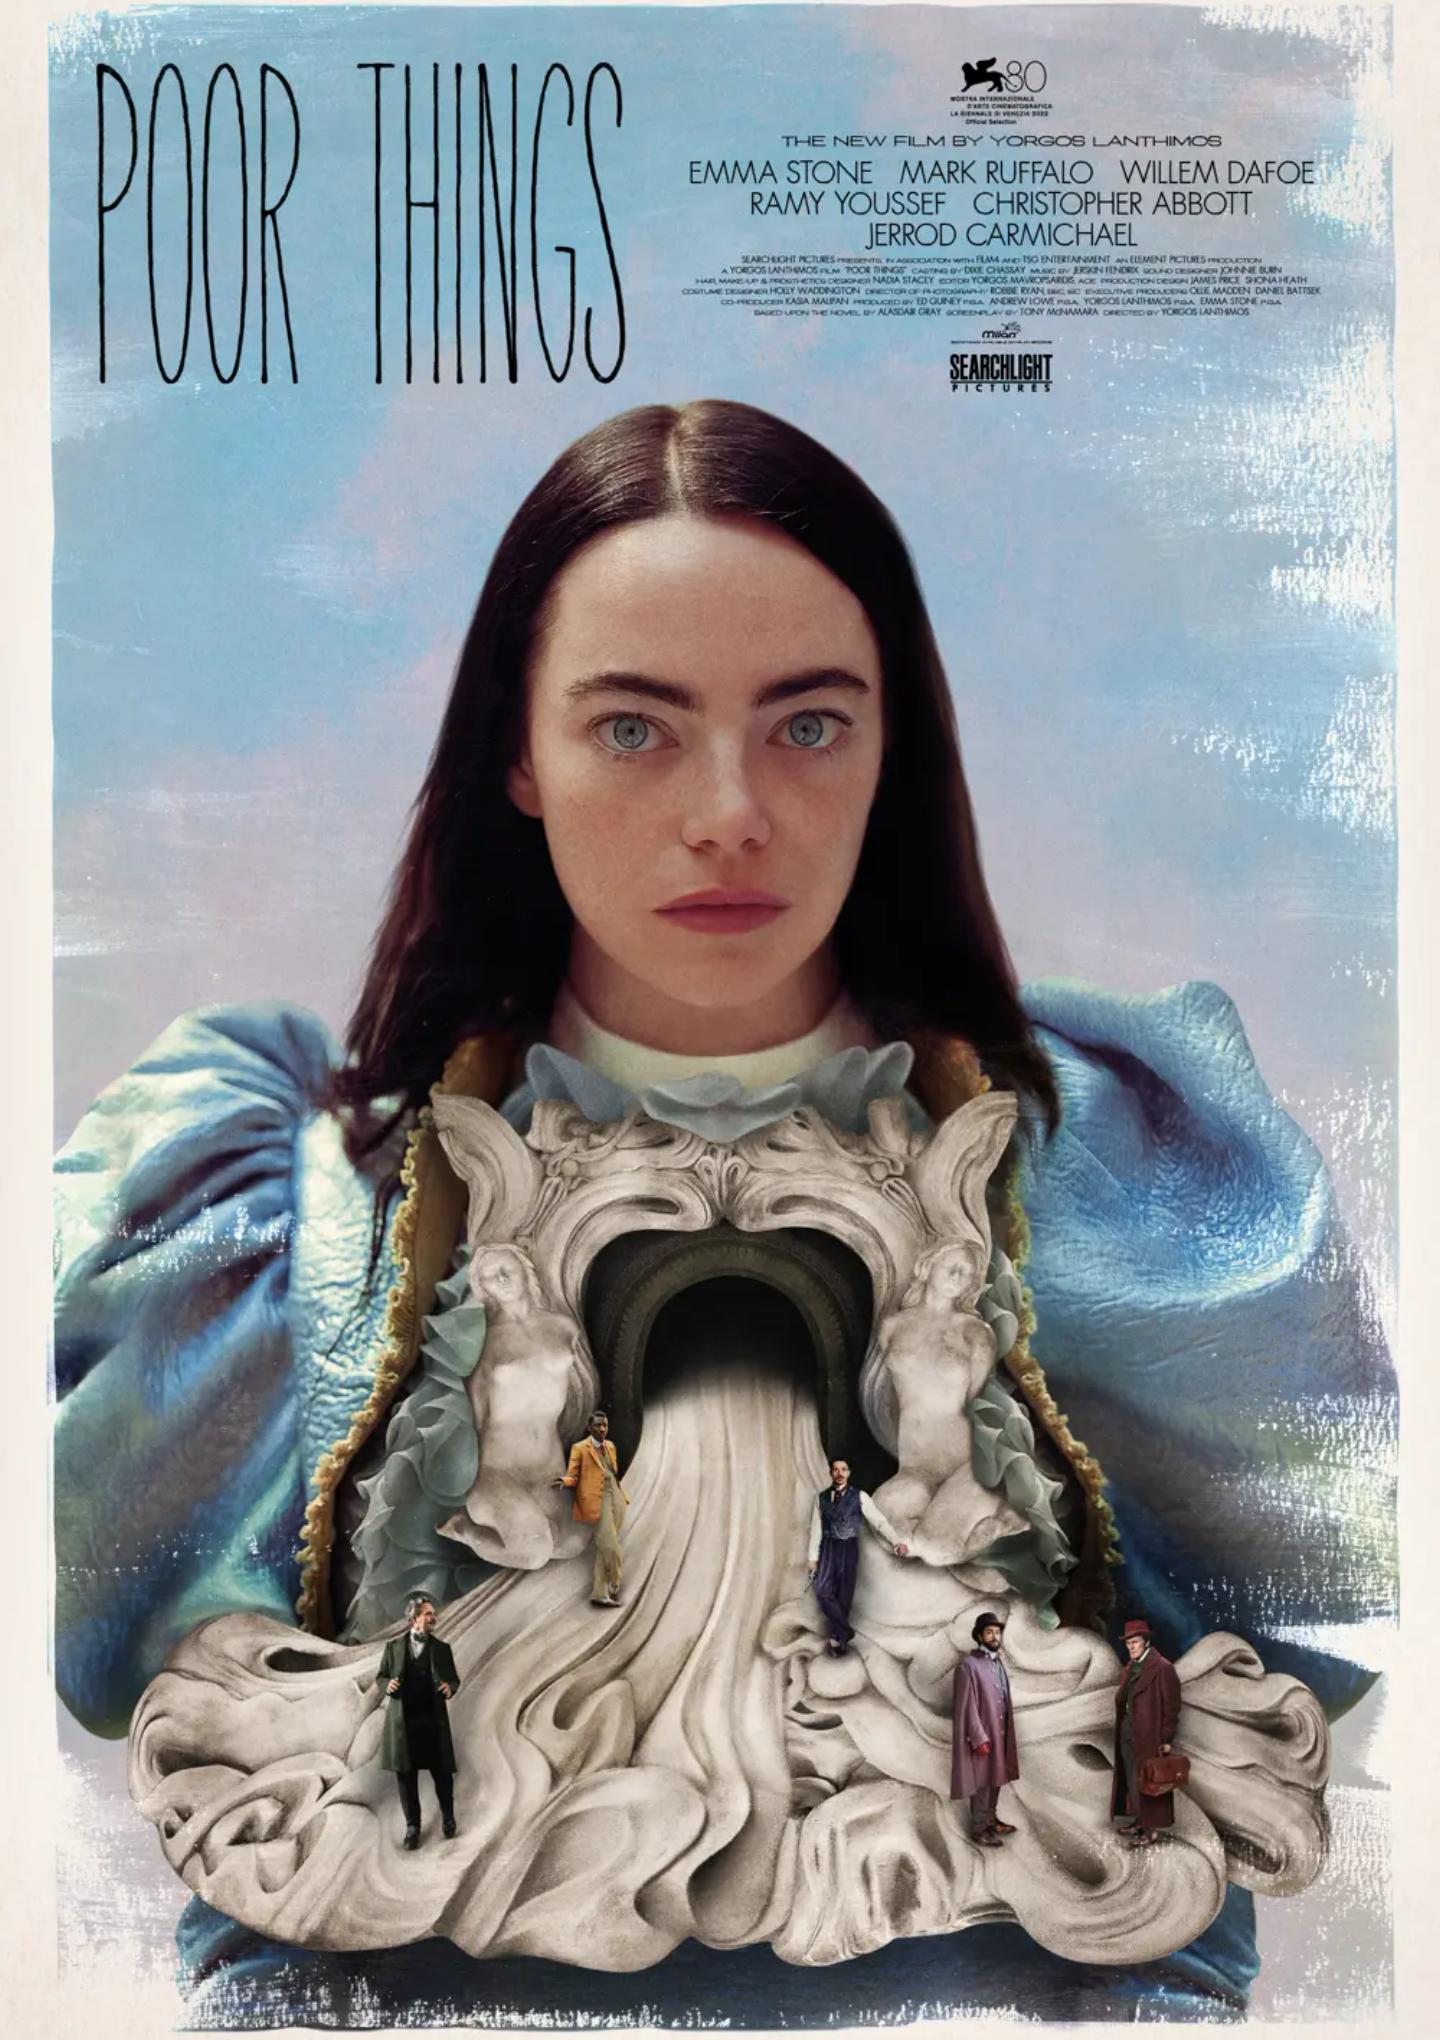 Plakat for 'Poor Things'